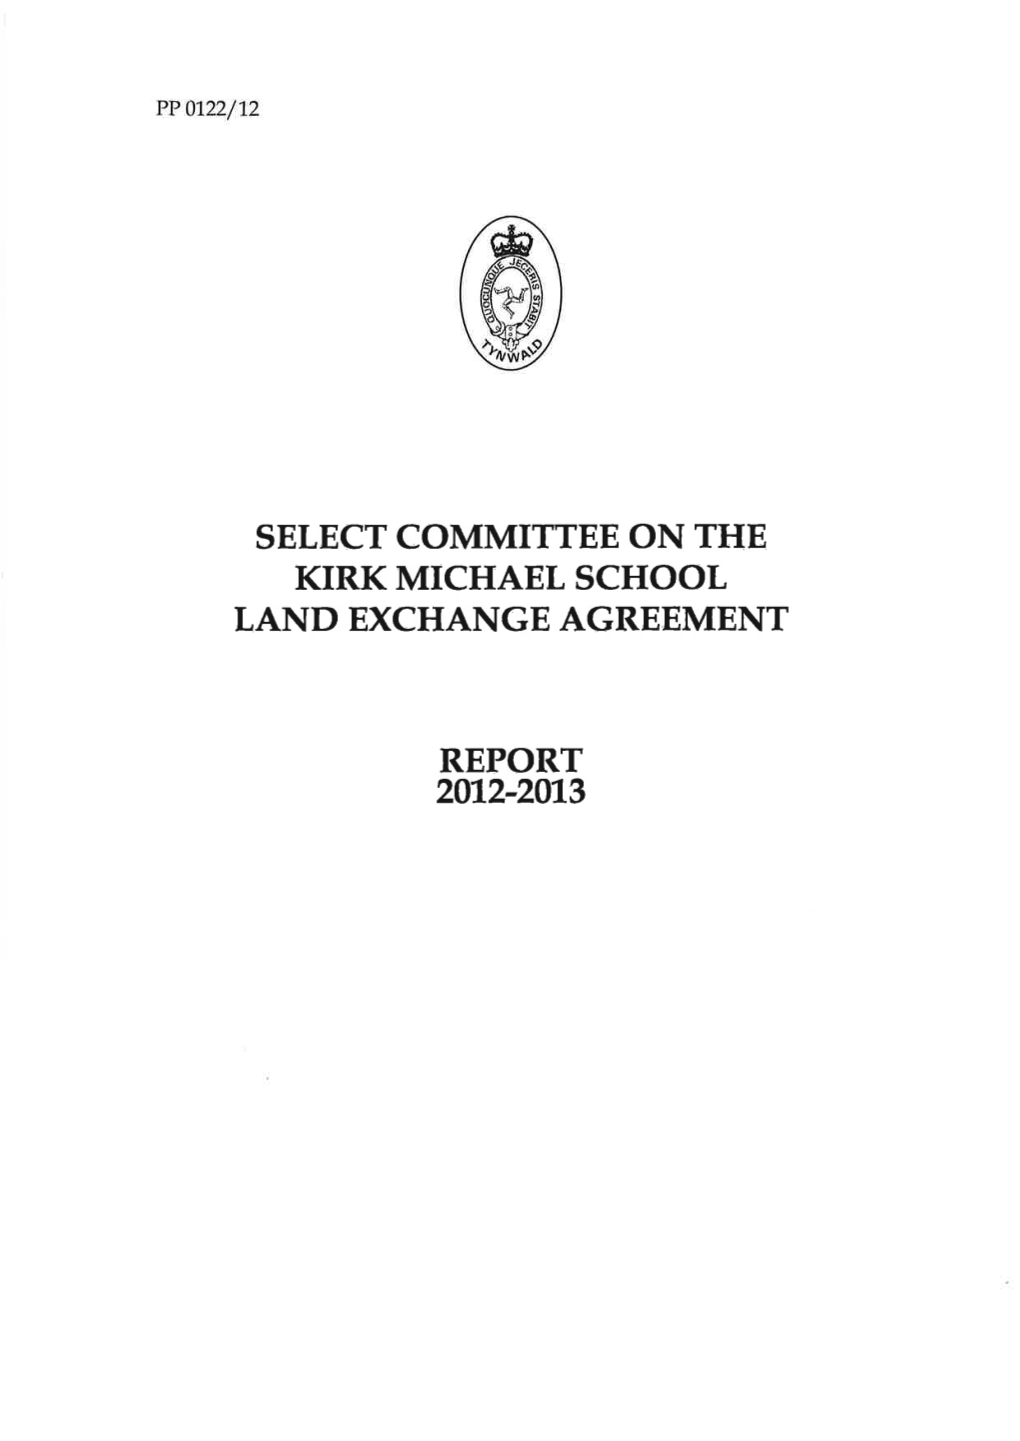 Select Committee on the Kirk Michael School Land Exchange Agreement Report 2012-2013